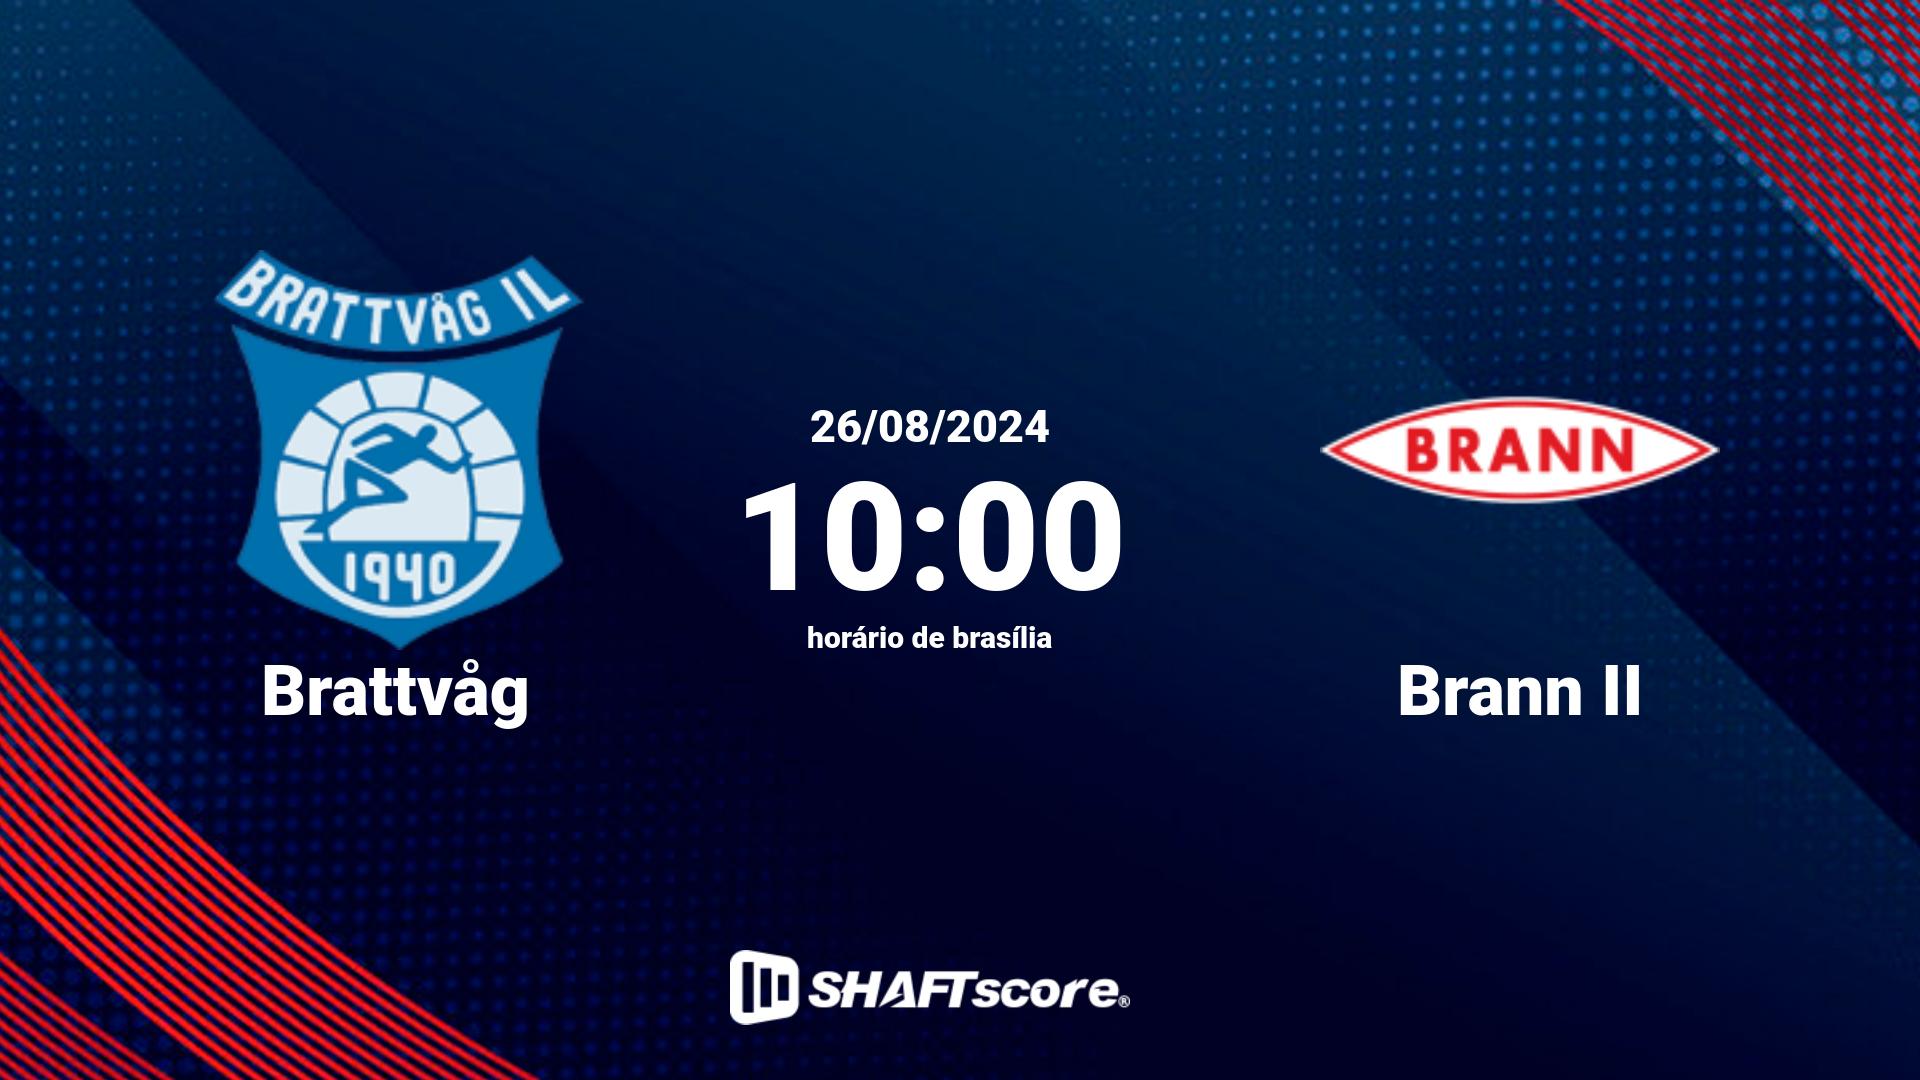 Estatísticas do jogo Brattvåg vs Brann II 26.08 10:00